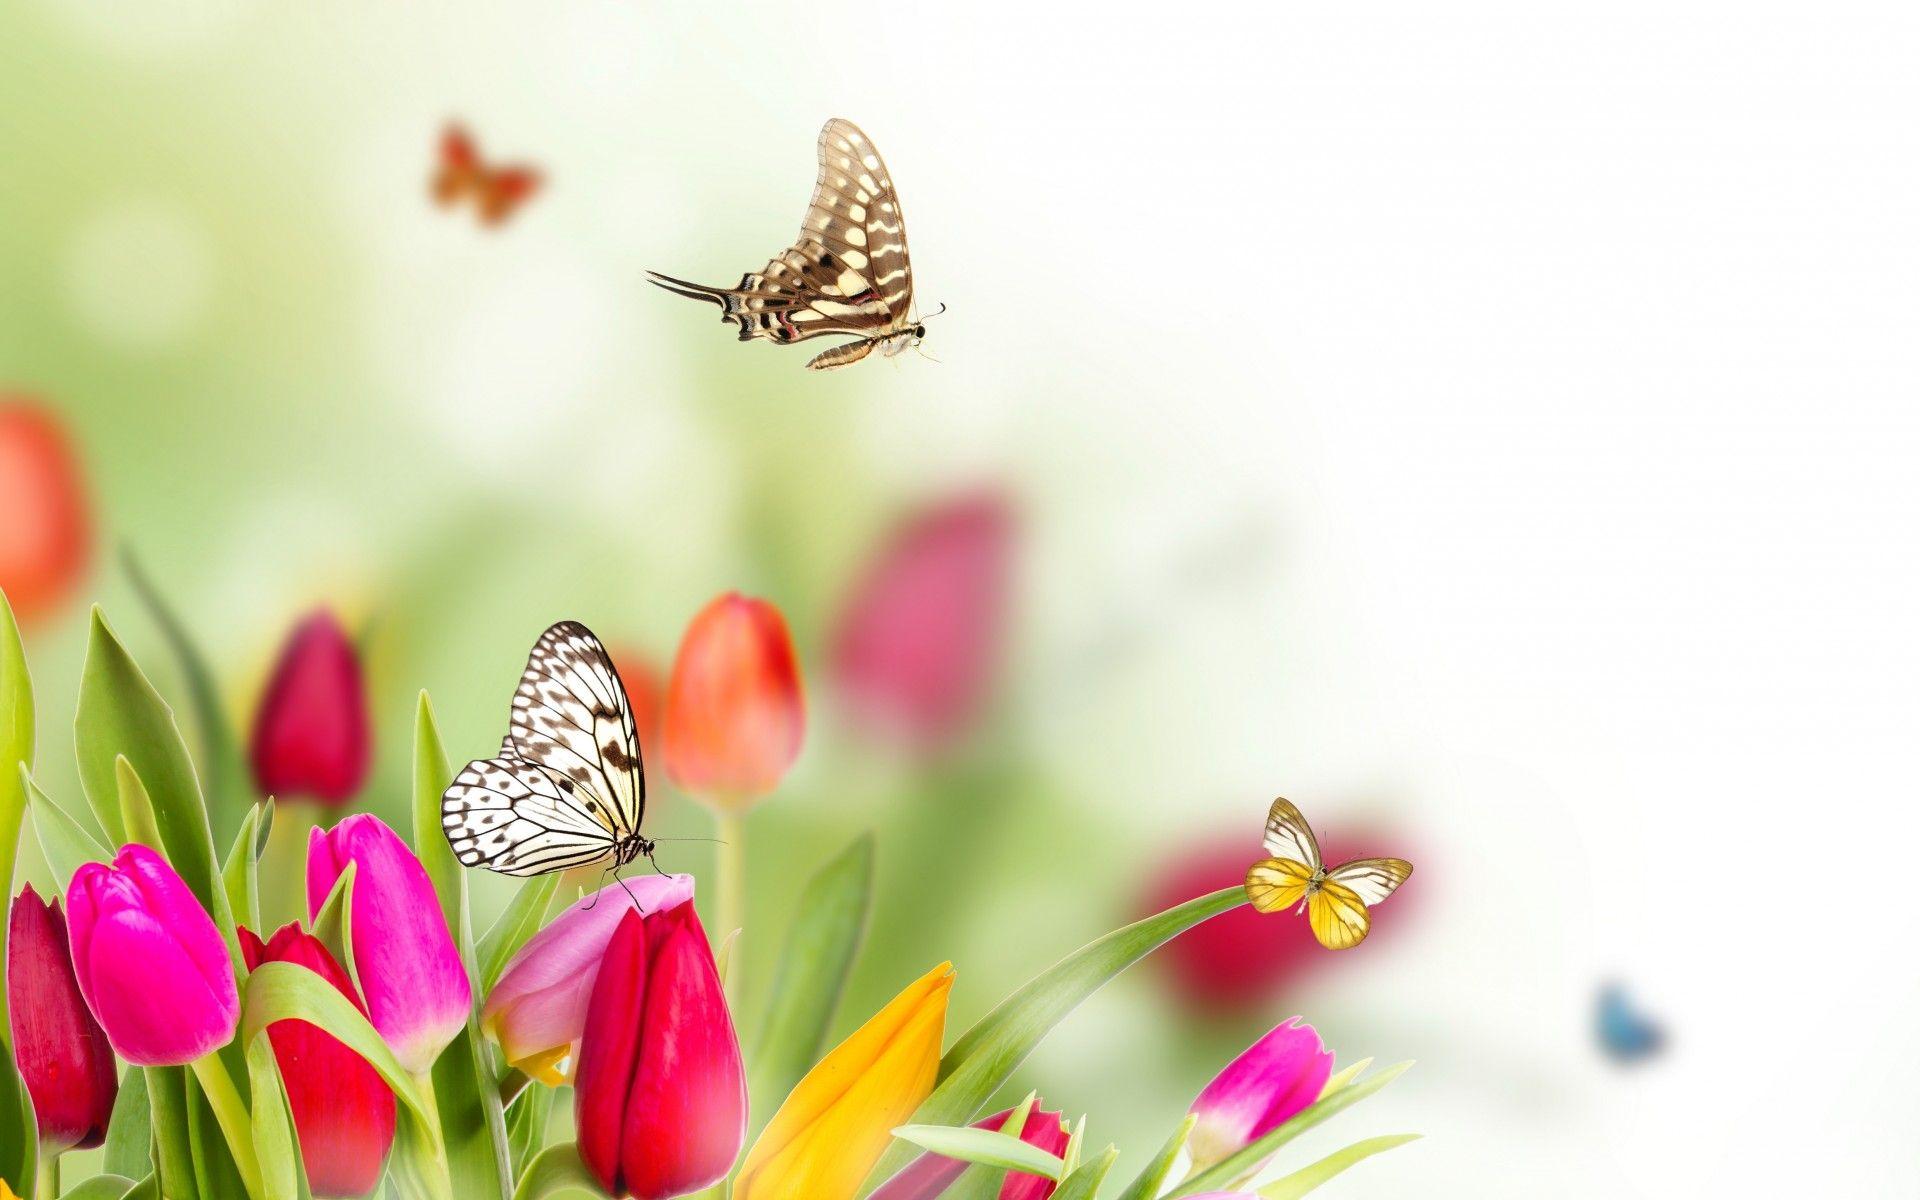 Spring Background free download. HD Wallpaper, Image